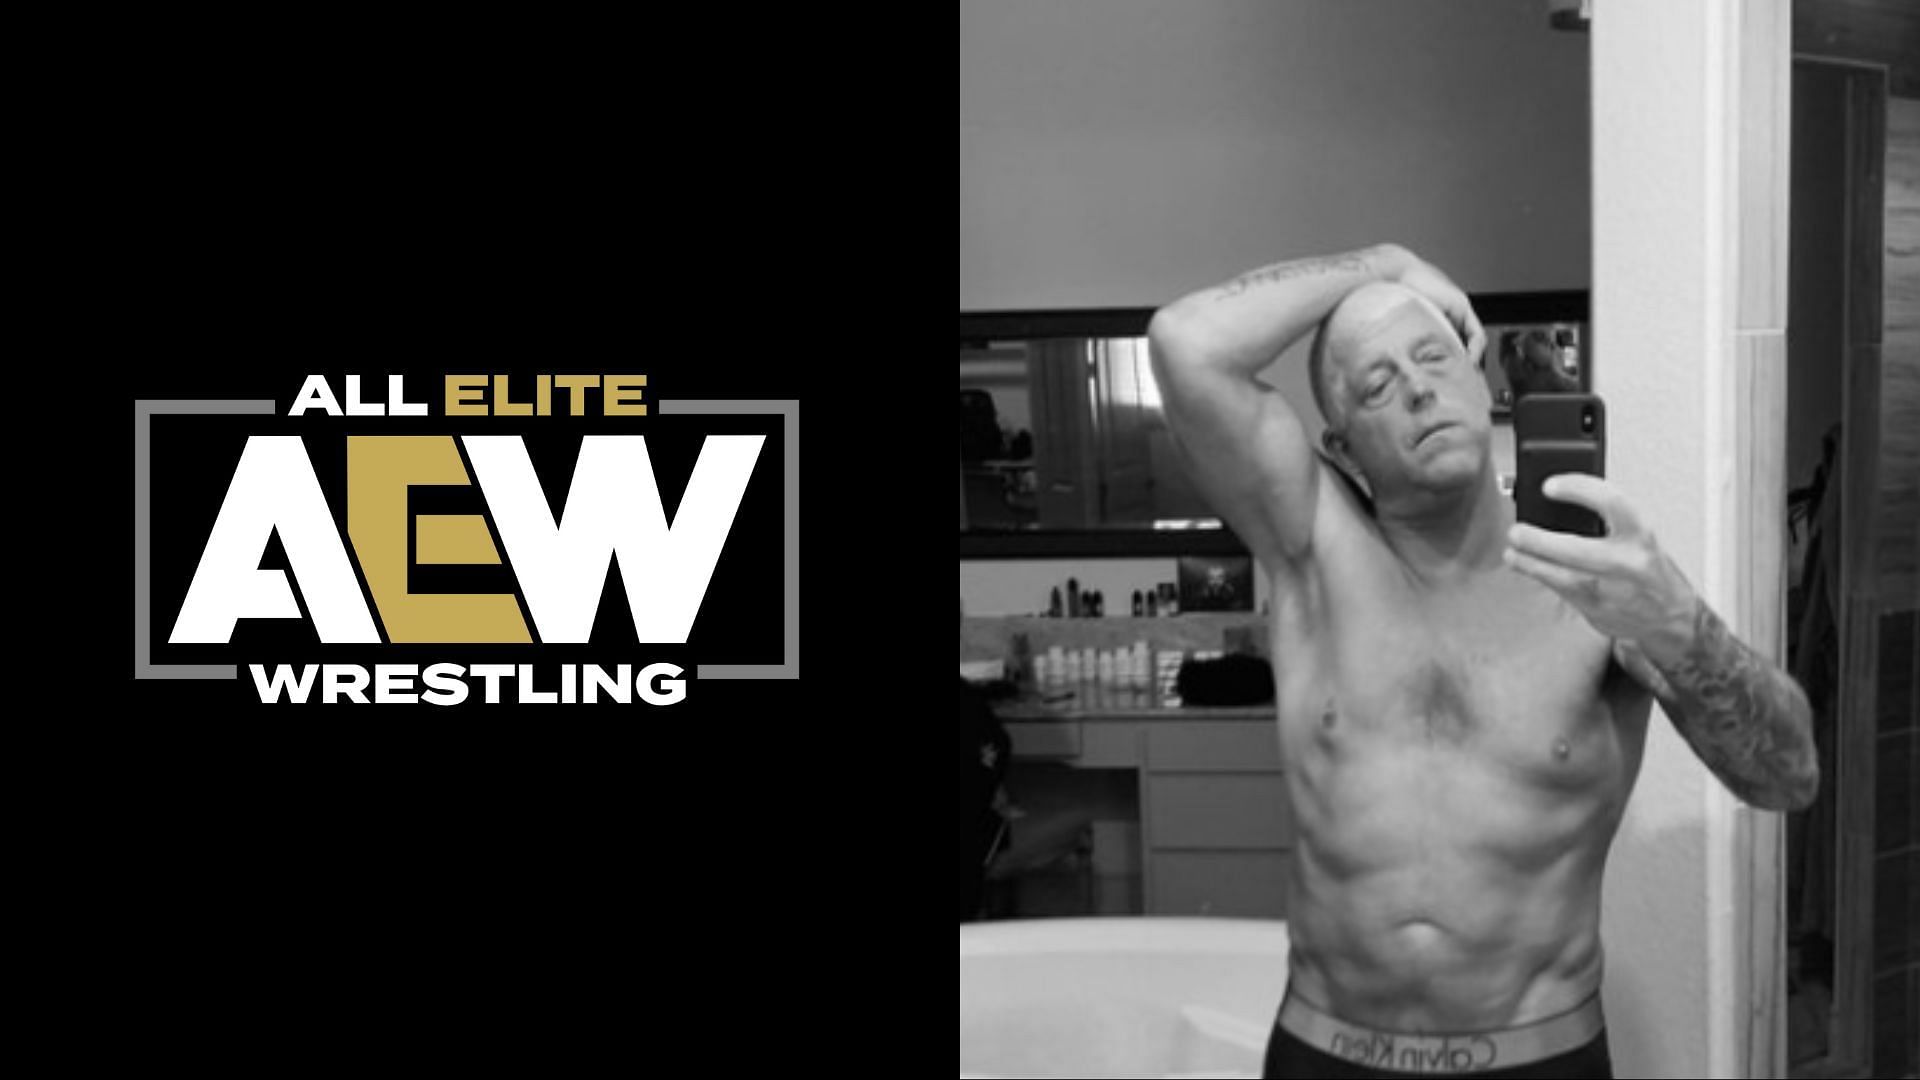 Dustin Rhodes is a former WWE Intercontinental Champion